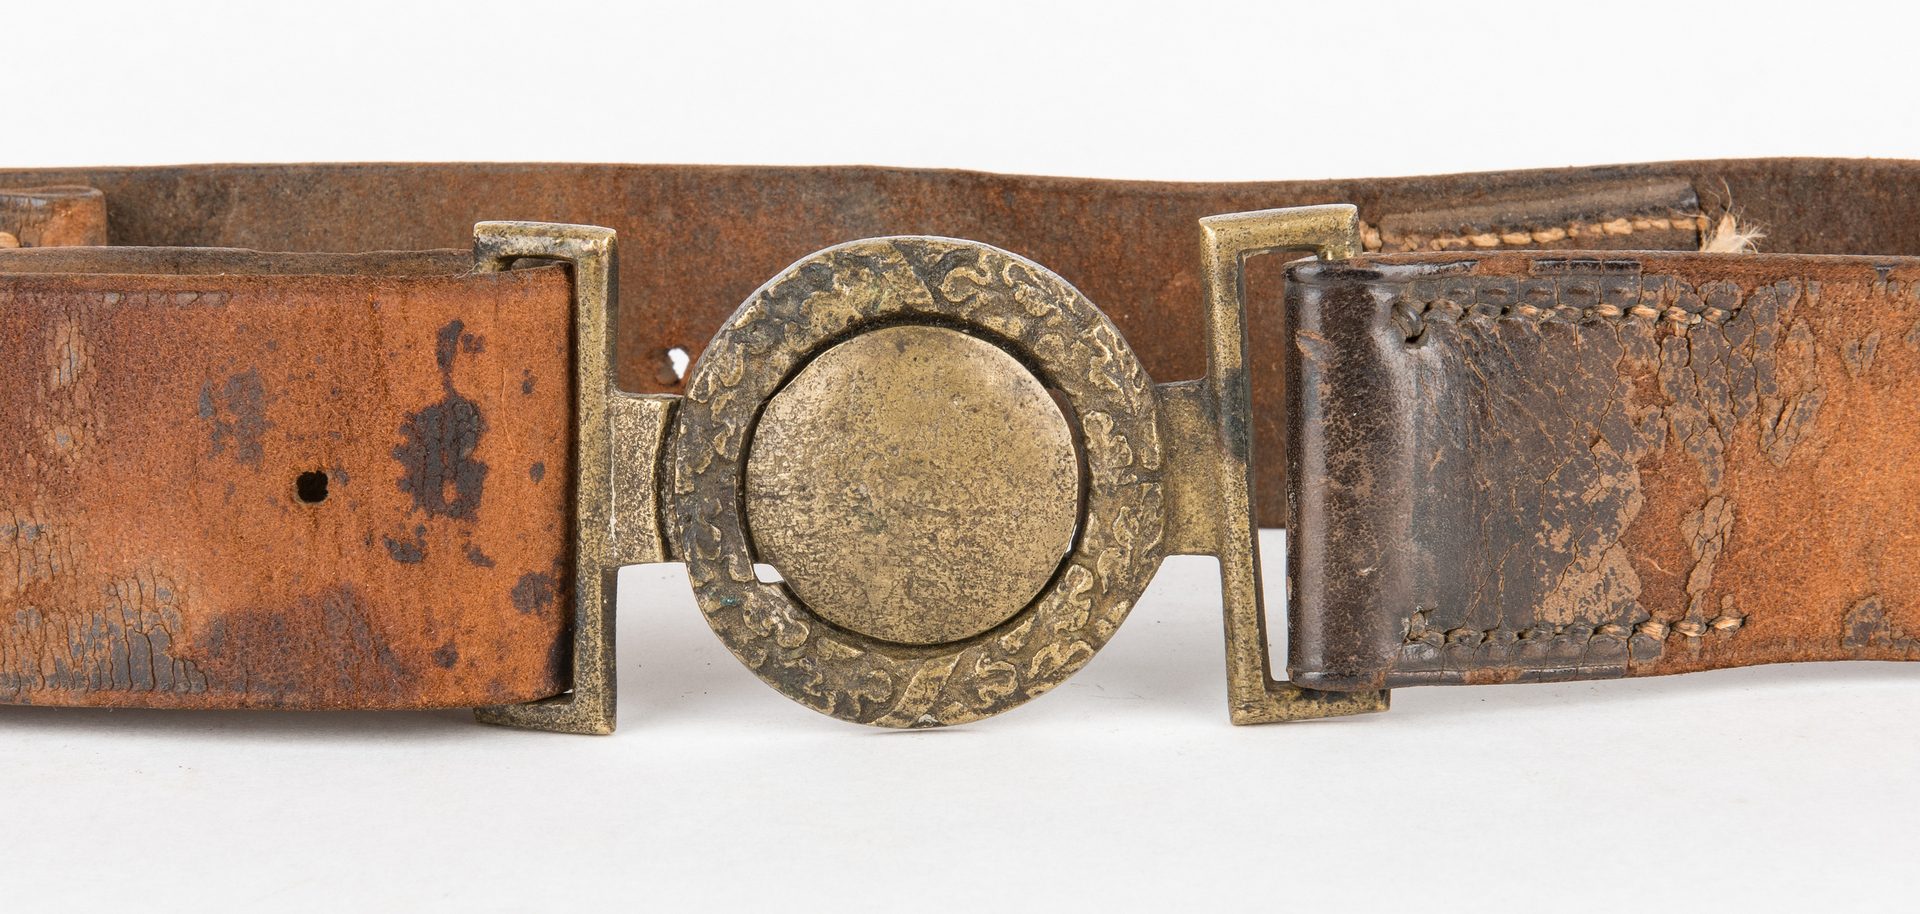 Lot 268: Confederate Leech & Rigdon Waist Plate on Leather Sword Belt